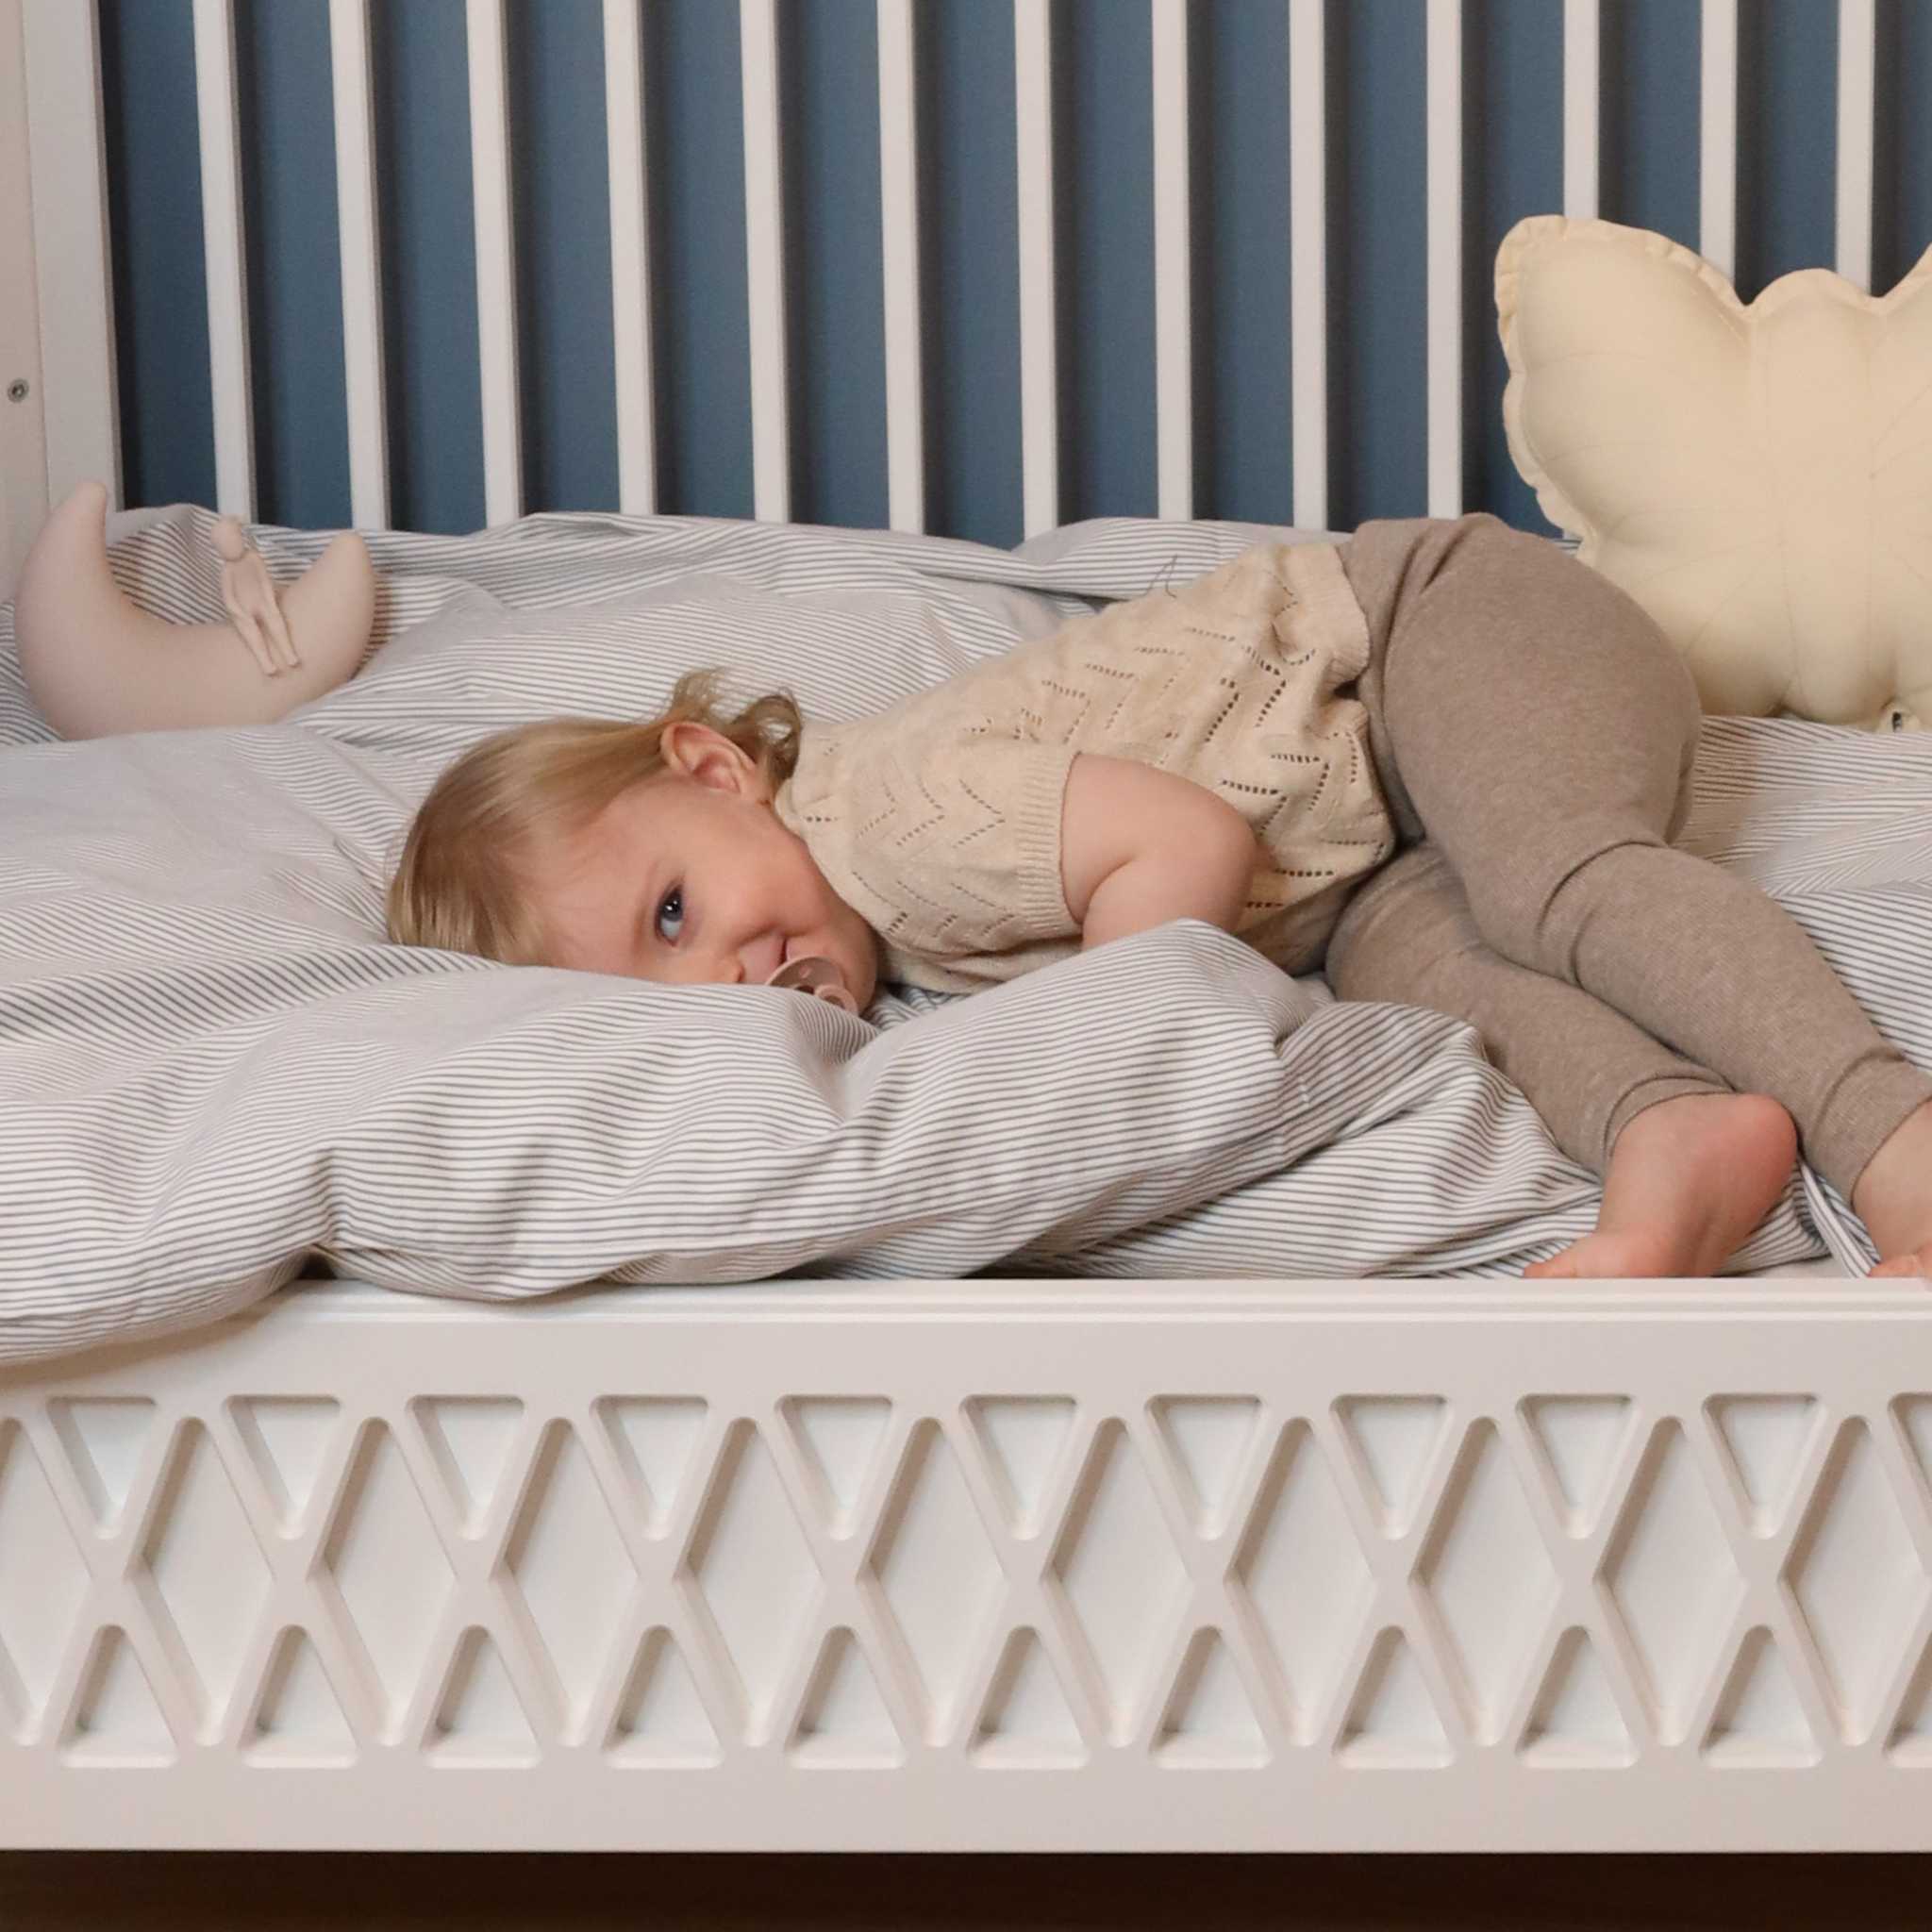 Cam Cam Copenhagen Toddler Bedding In Blue Stripe In Cot With Child